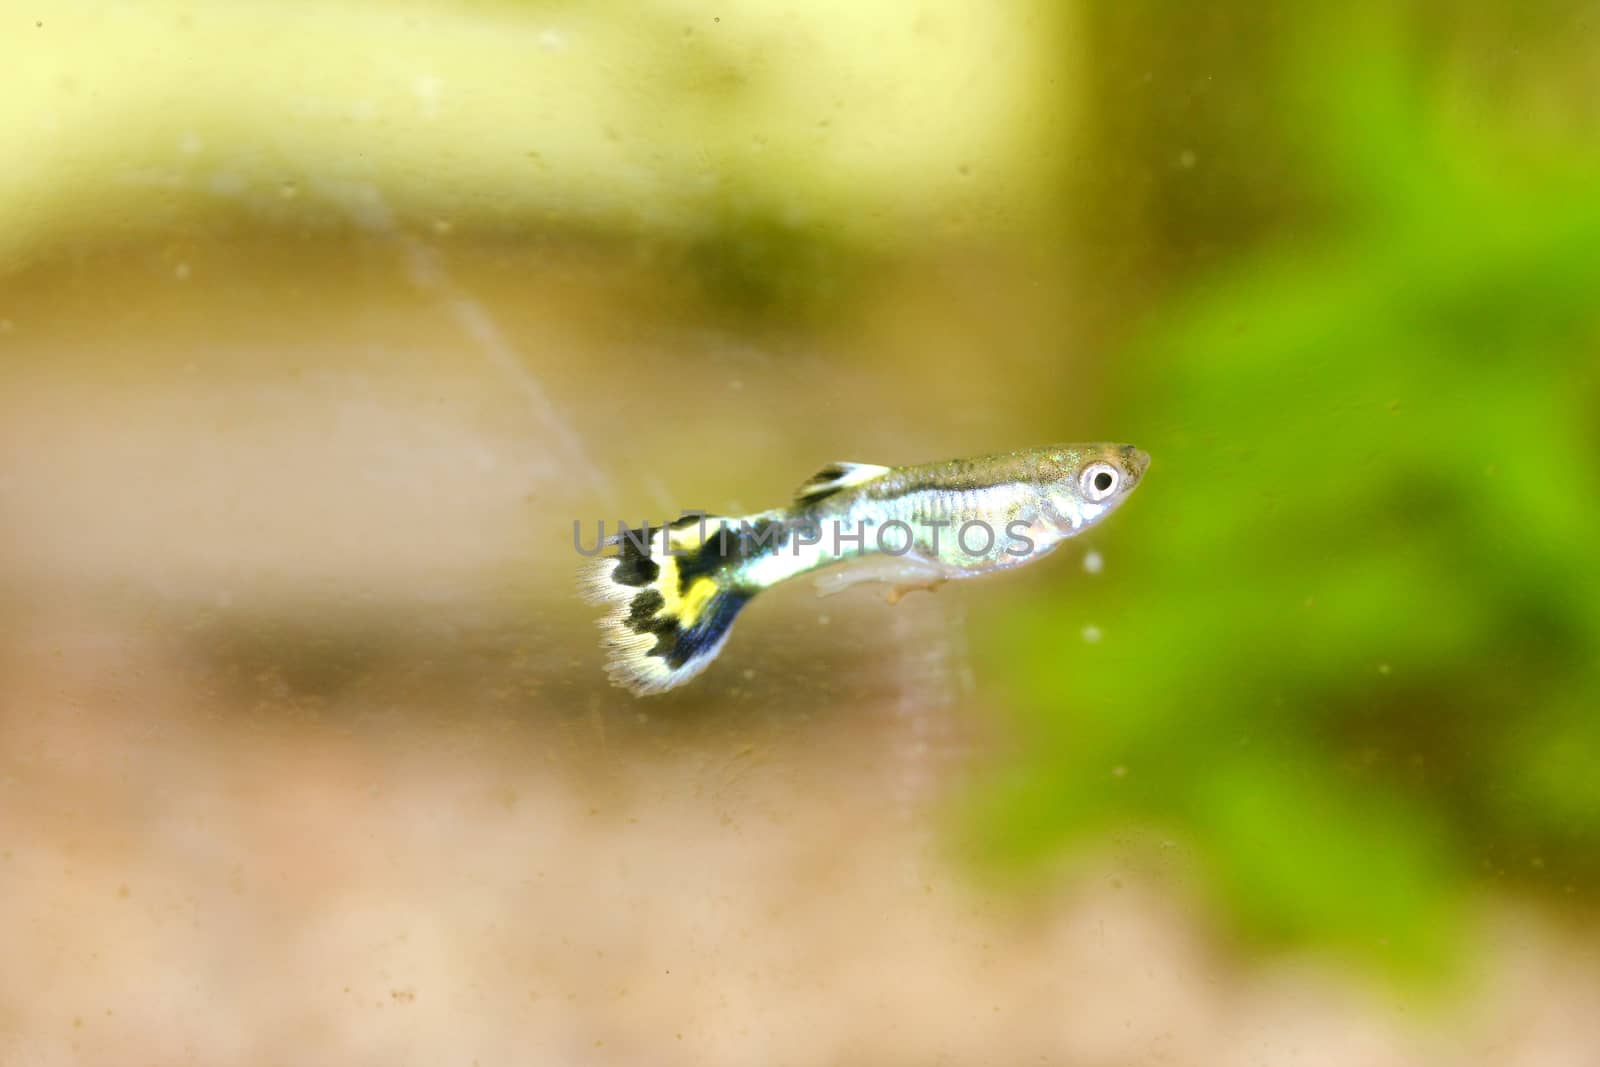 A male guppy (Poecilia reticulata), a popular freshwater aquarium fish